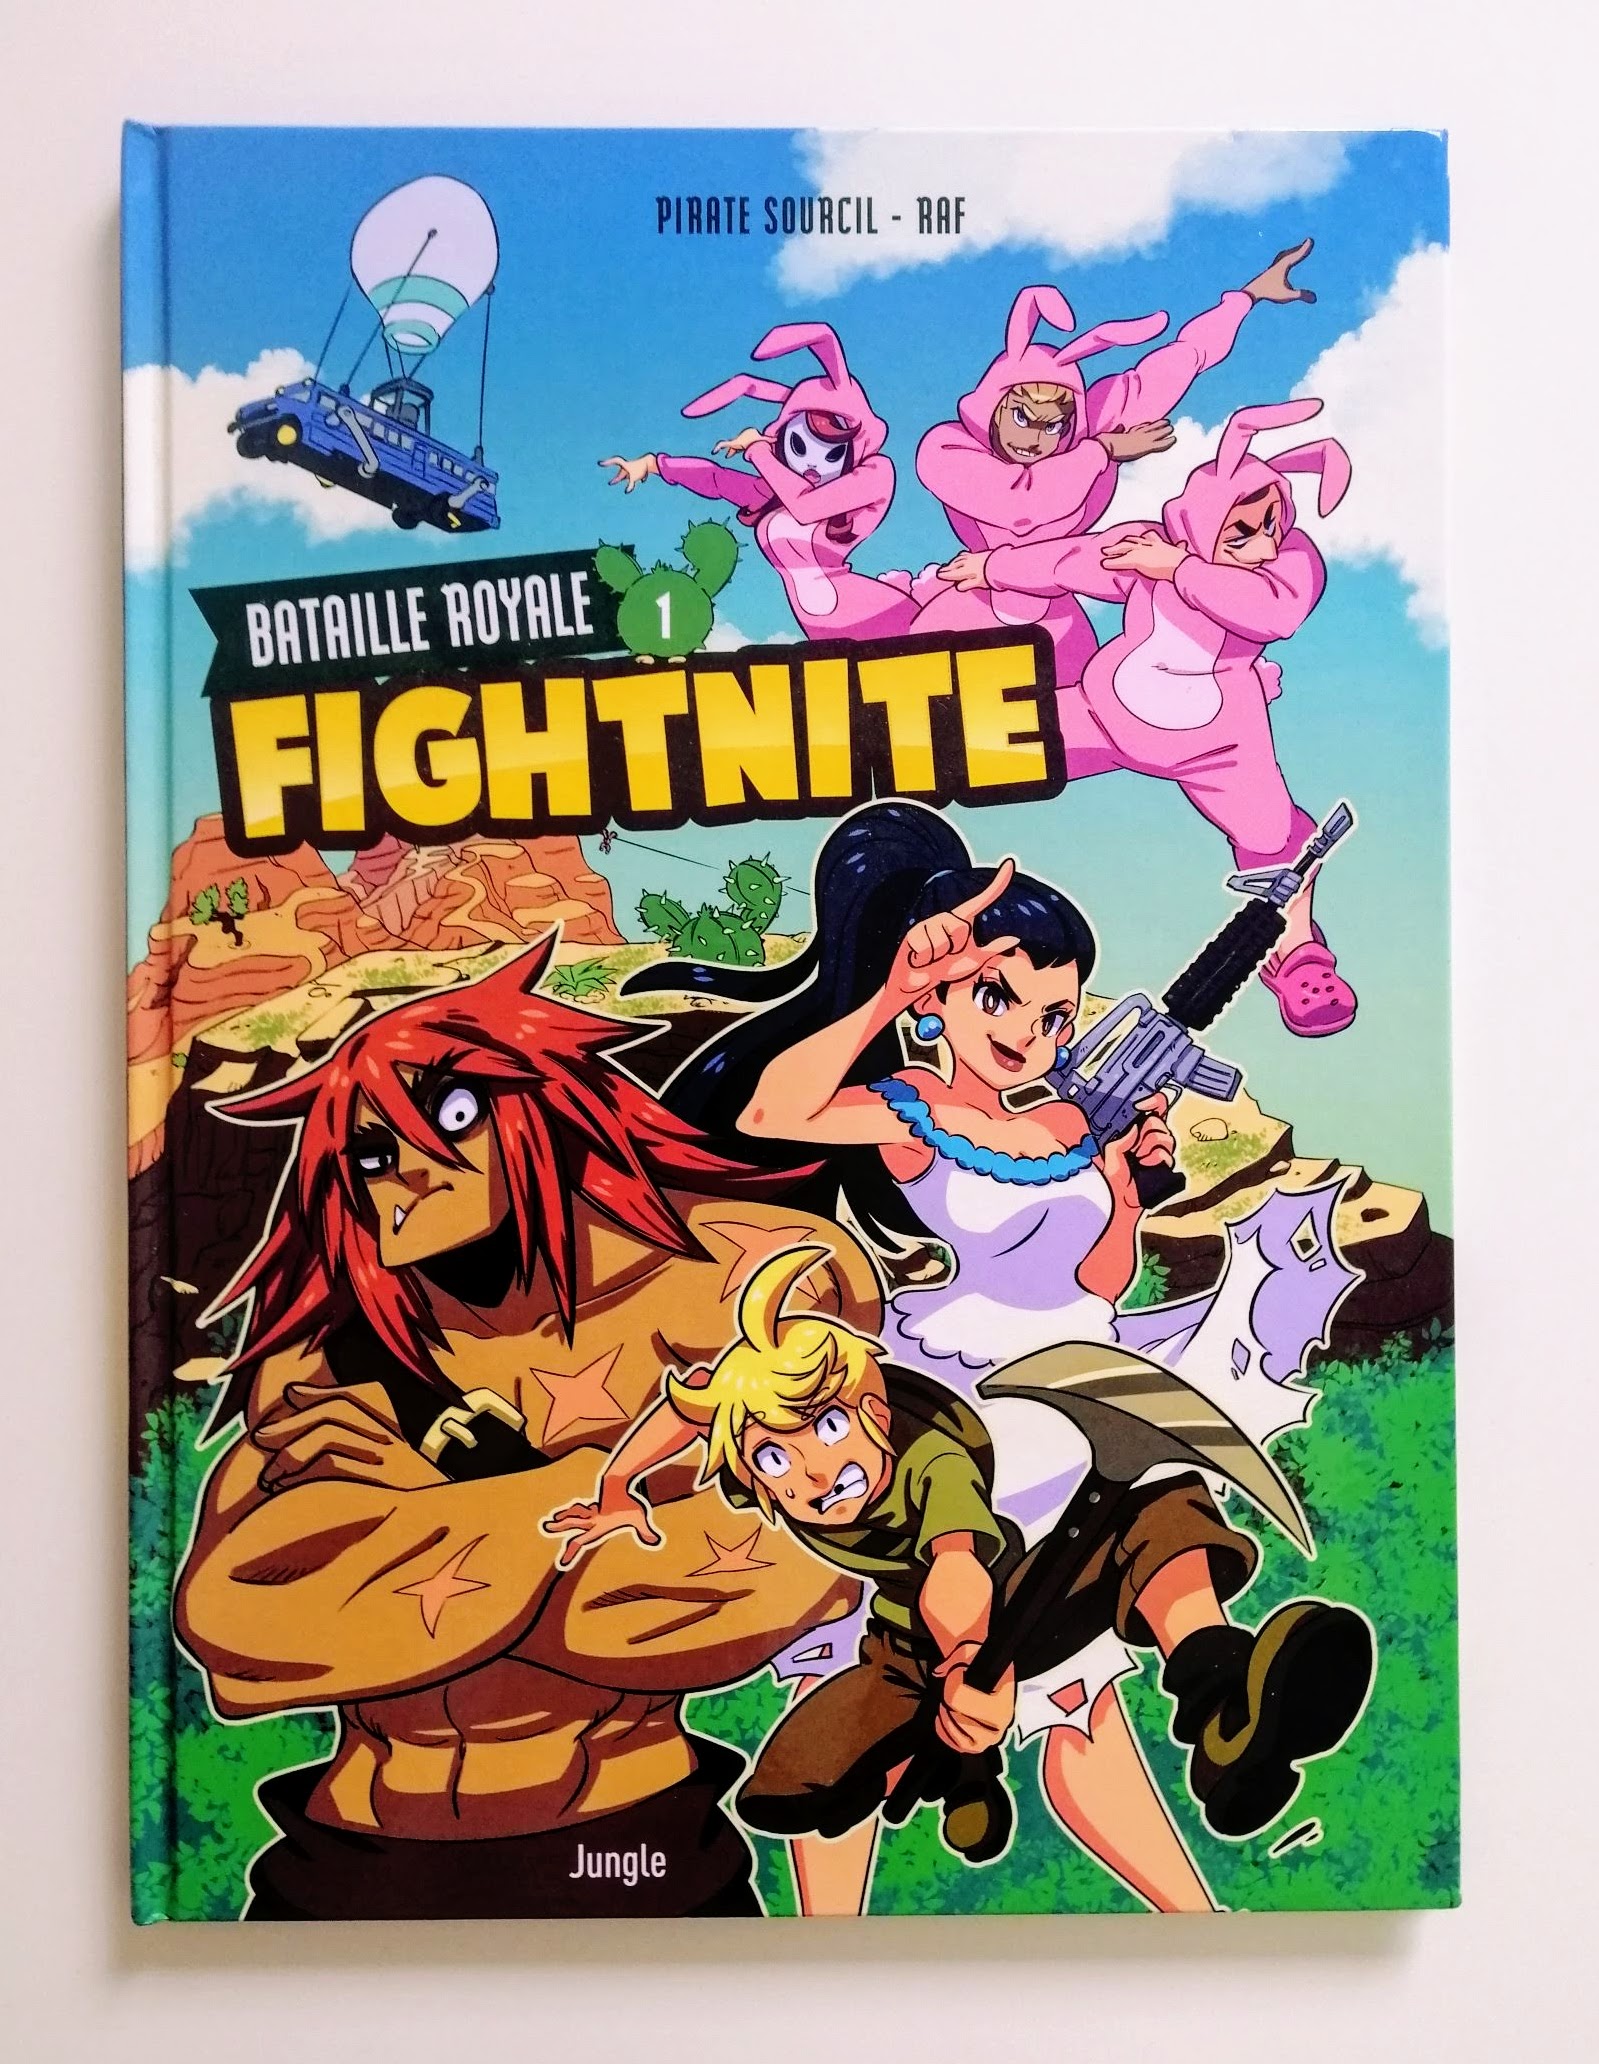 Fightnite - Bataille Royale - 01 - Les campeurs - Pirate Sourcil - Raf - BD - Jungle - Little Book Addict - IV